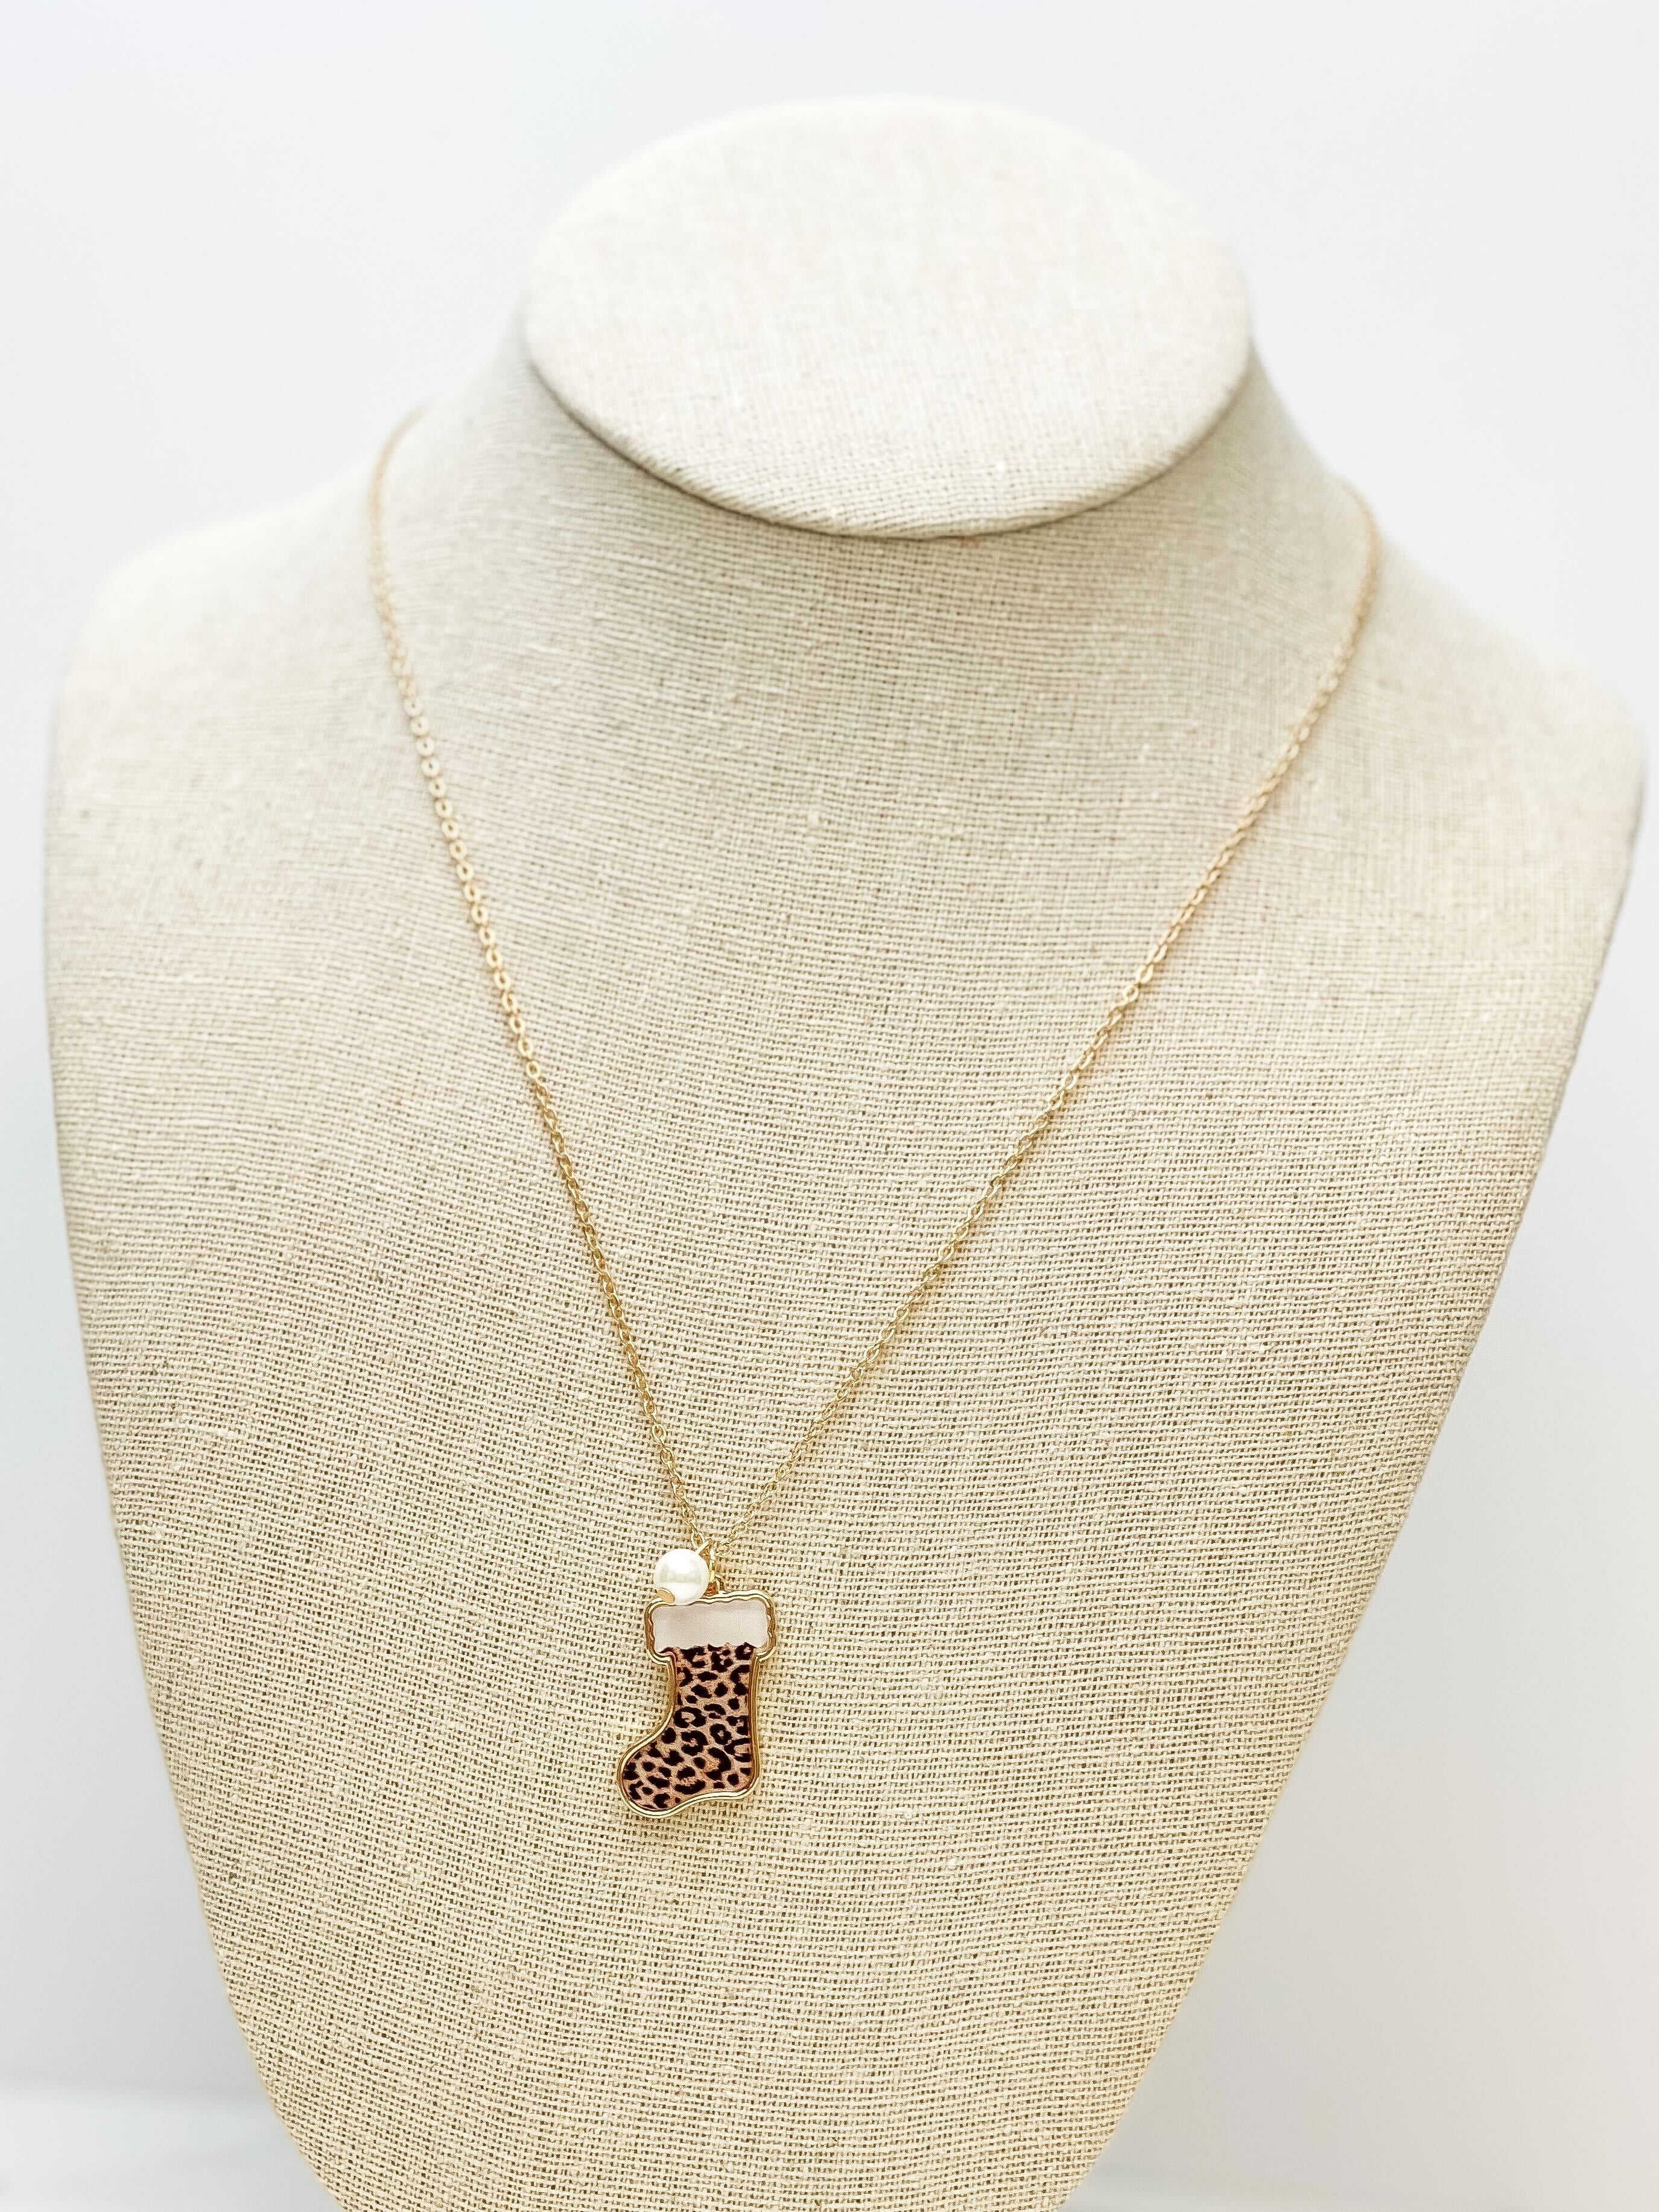 Printed Stocking Pendant Necklace - Cheetah